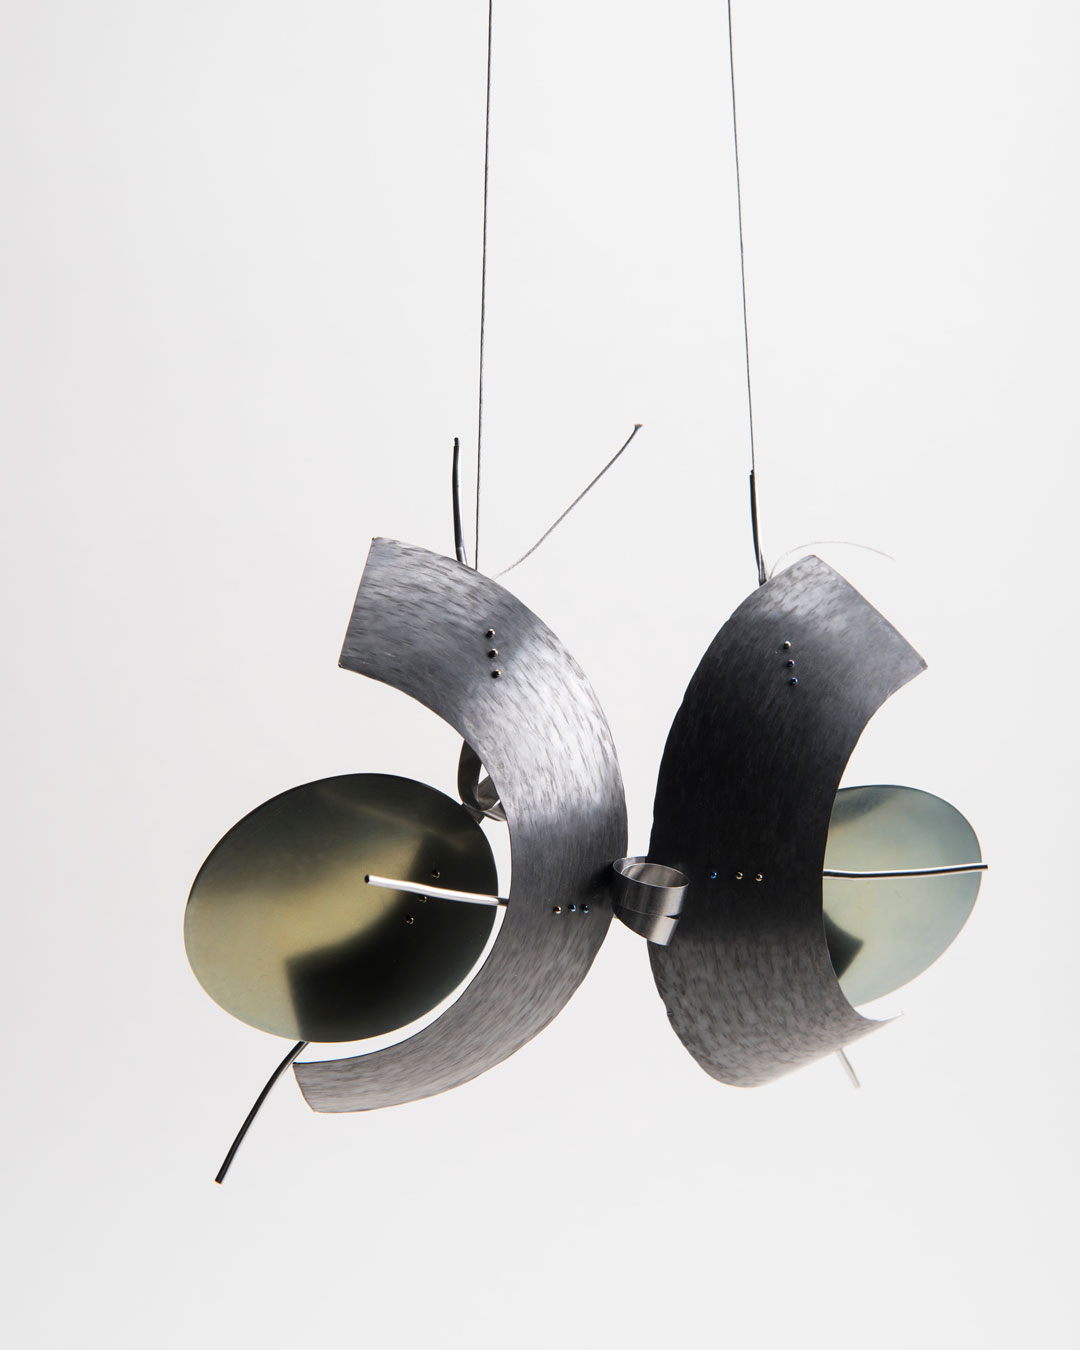 Andrea Wippermann, Ursus Giganteus, 2018, pendant; stainless steel, titanium, nylon, blackened silver, 150 x 180 x 40 mm, €2450